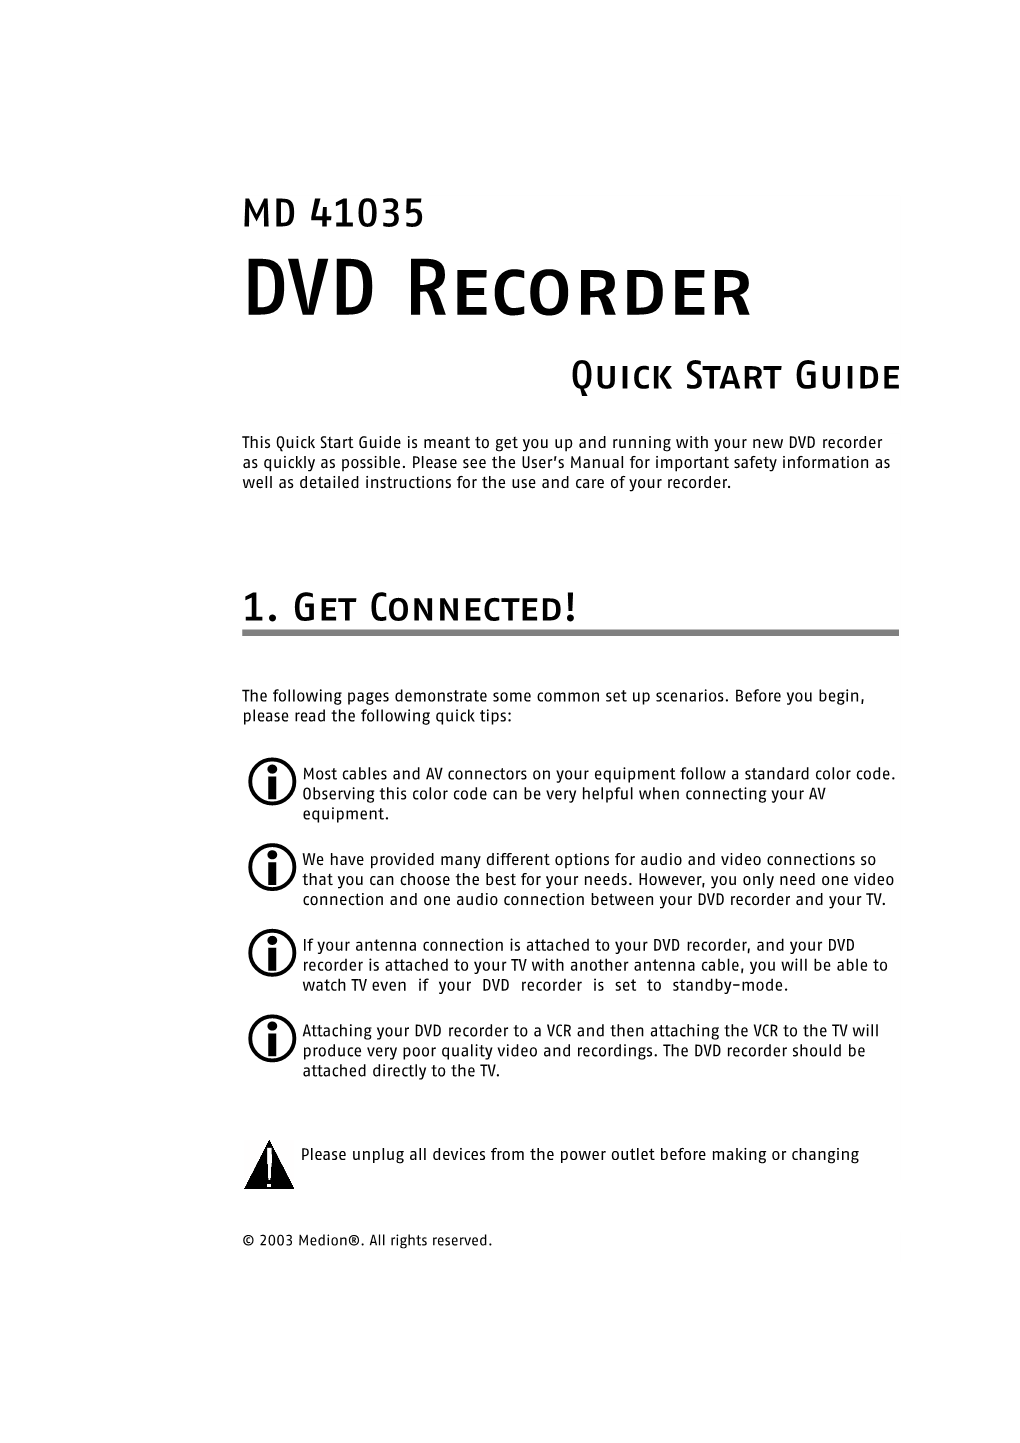 DVD Recorder Quick Start Guide